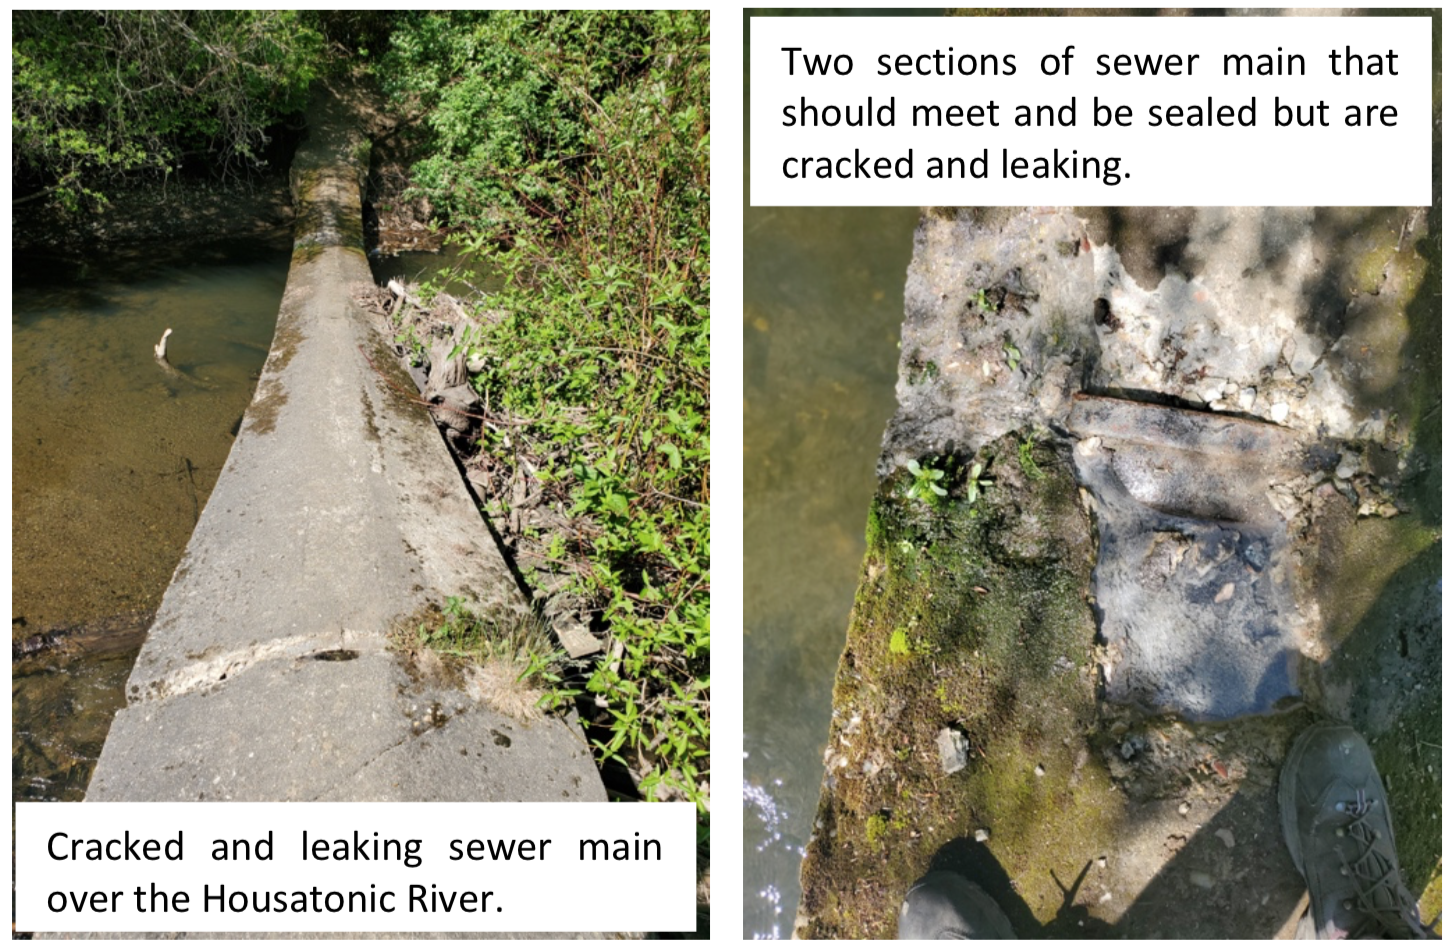 BEAT Locates Raw Sewage Flowing Into Housatonic